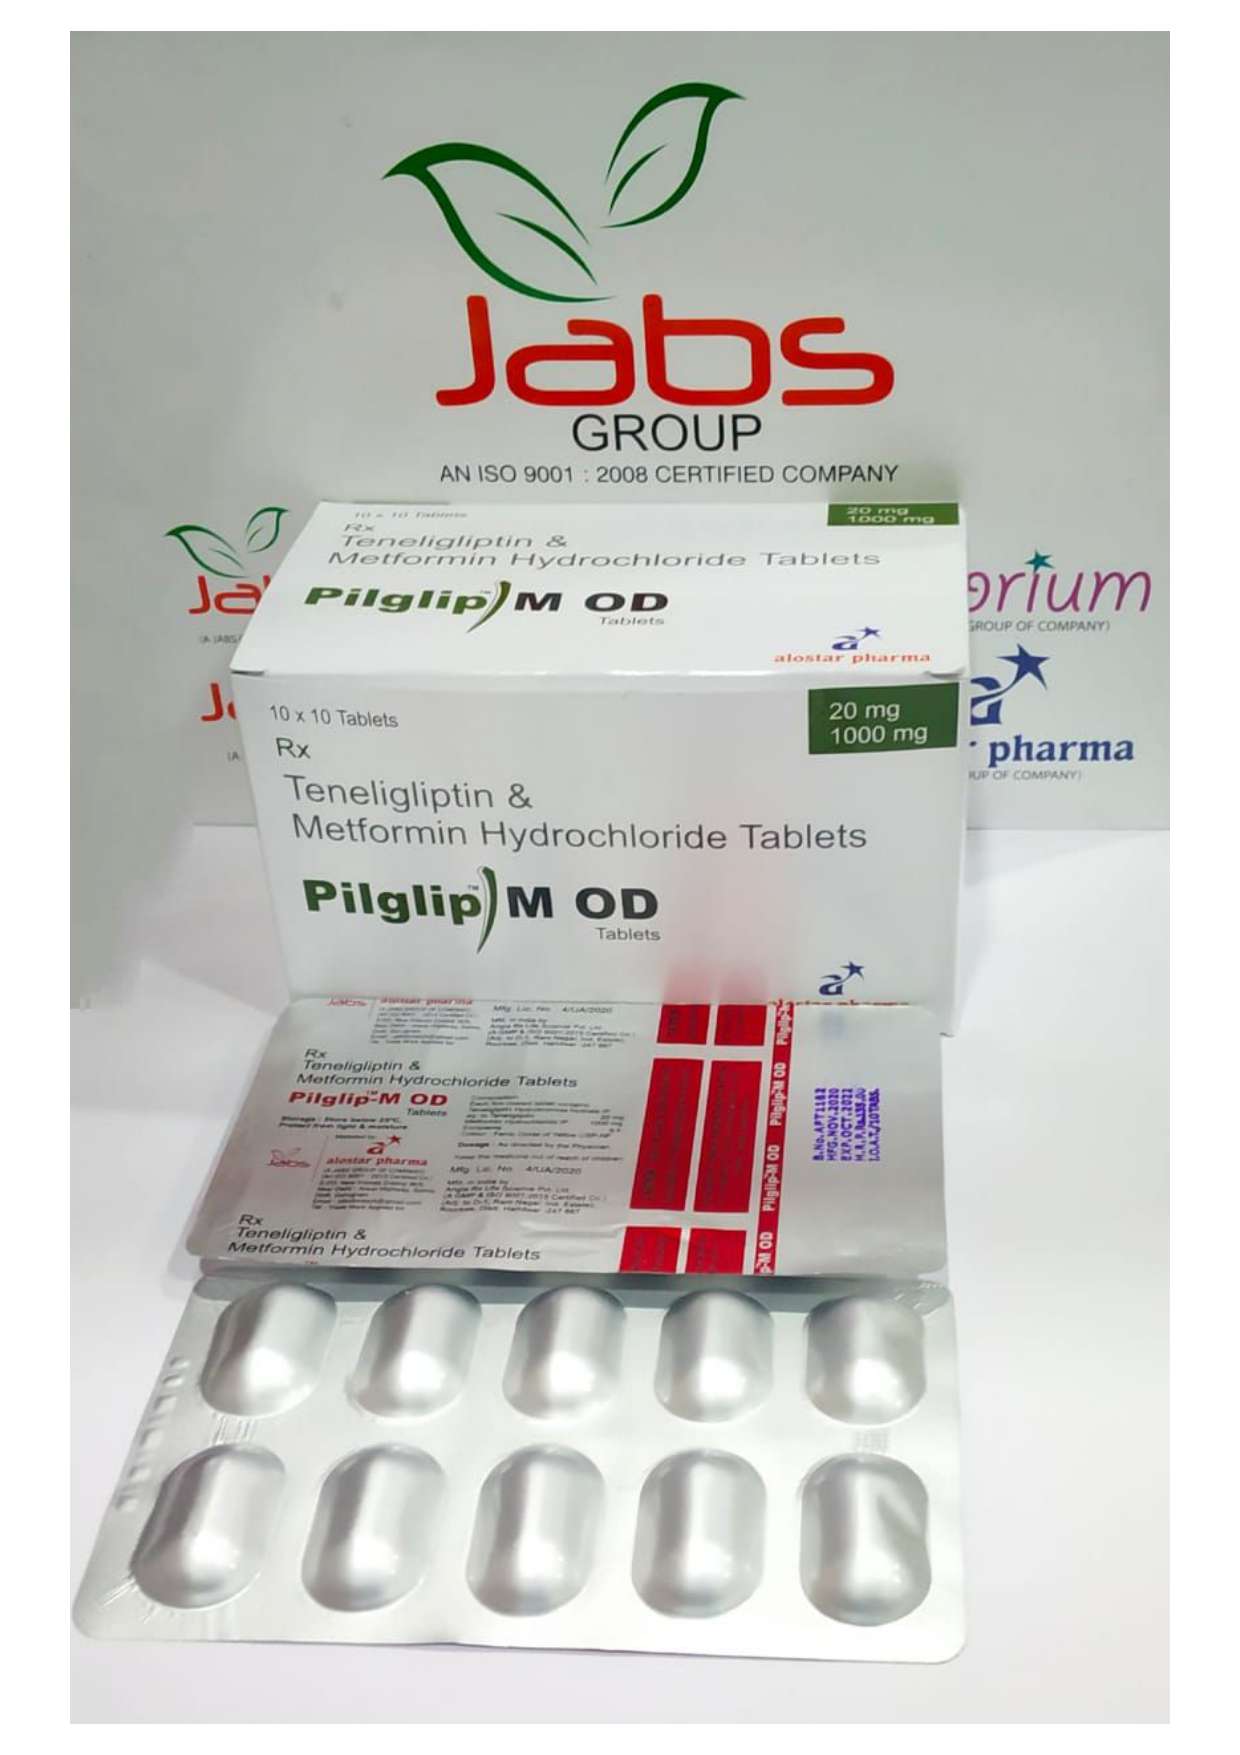 teneligliptin 20 mg + metformin hydrochloride 1000mg